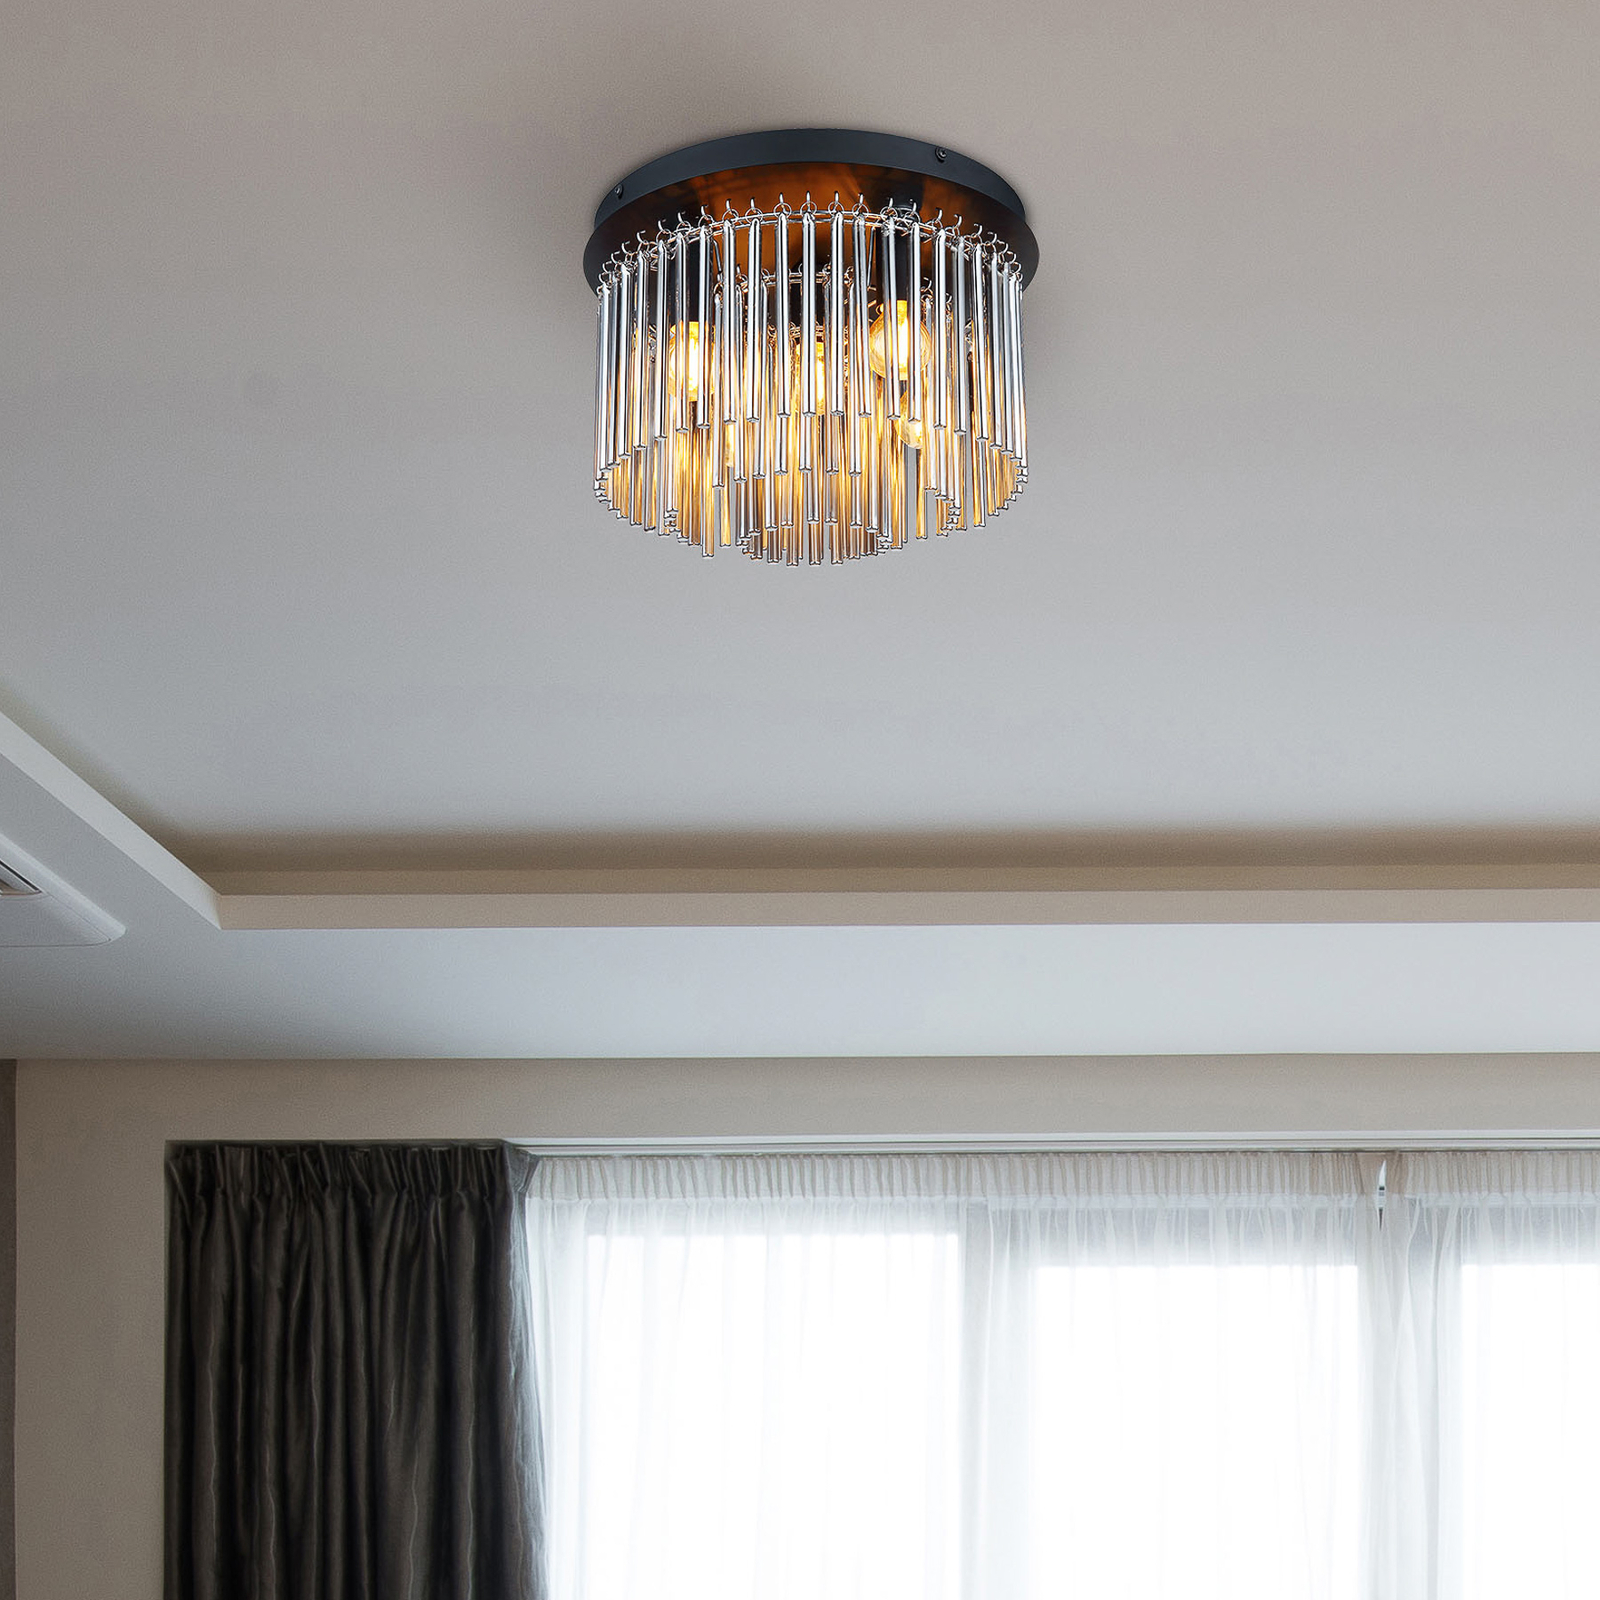 Gorley ceiling light with glass pendant Ø 32 cm